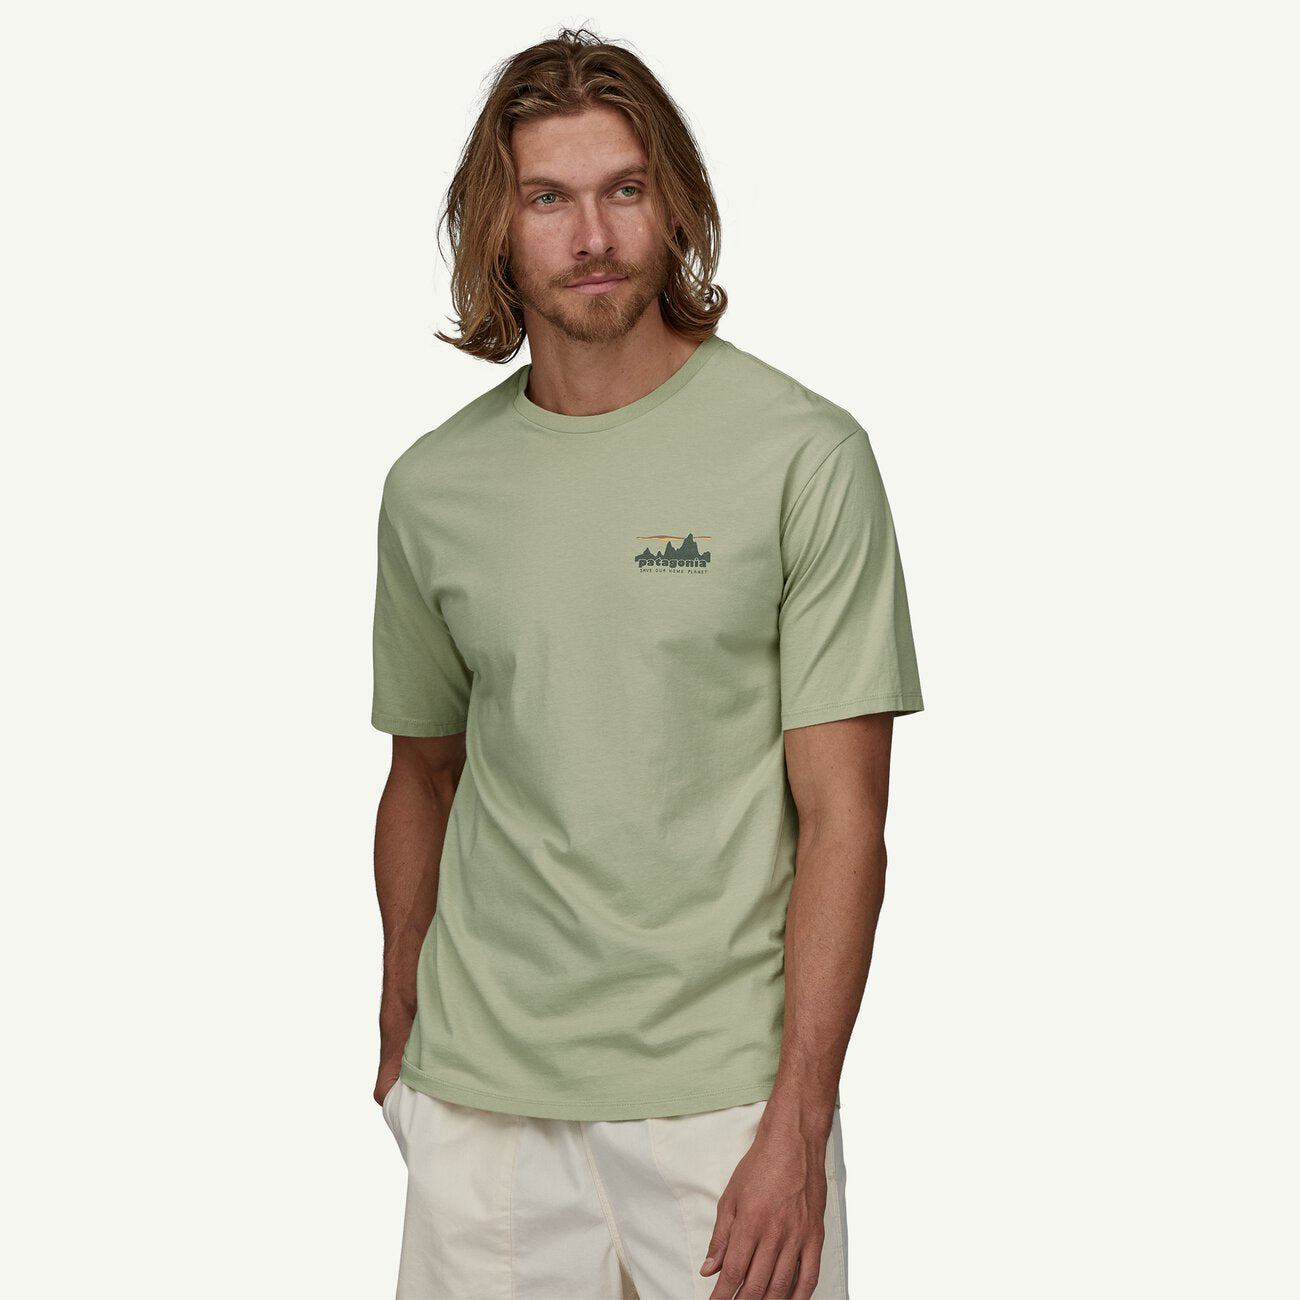 Men's '73 Skyline Organic T-Shirt - Patagonia Australia